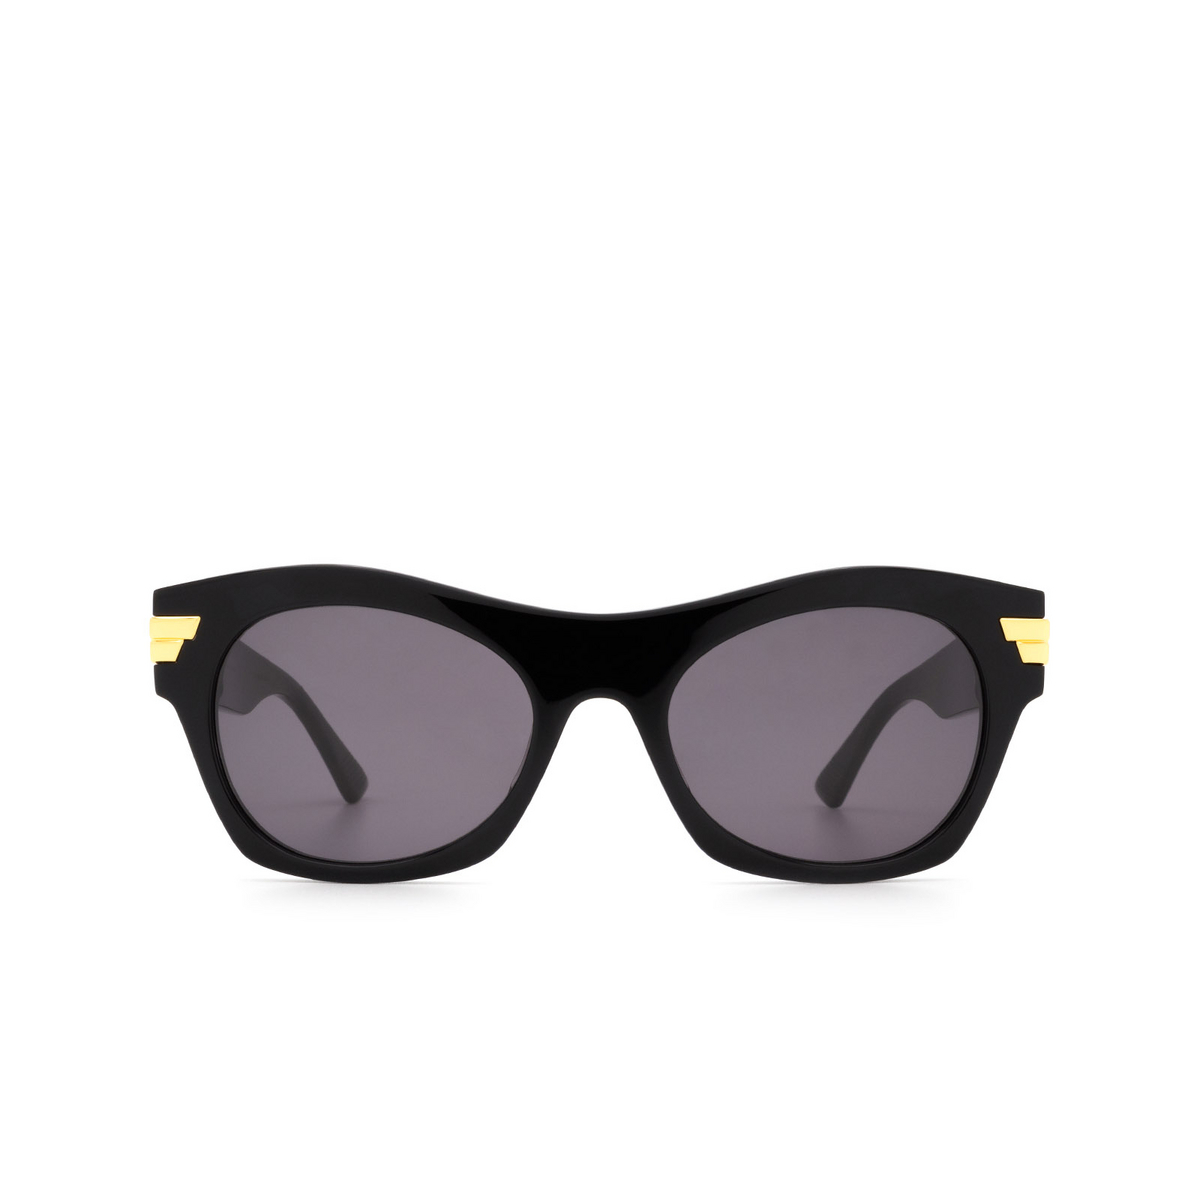 Bottega Veneta® Square Sunglasses: BV1103S color Black 001 - front view.